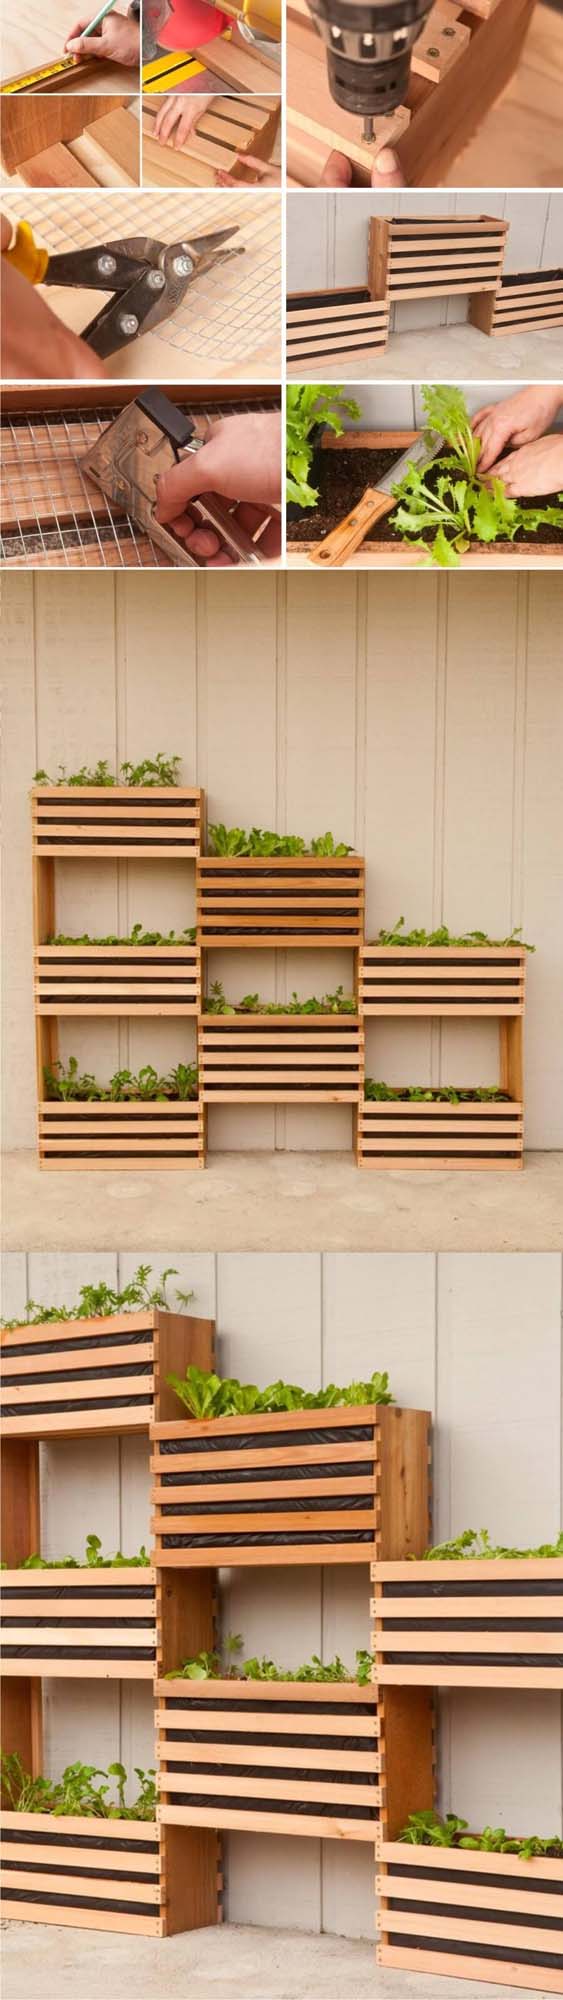 DIY Wood Crate Planter Boxes #diy #planter #garden #decorhomeideas